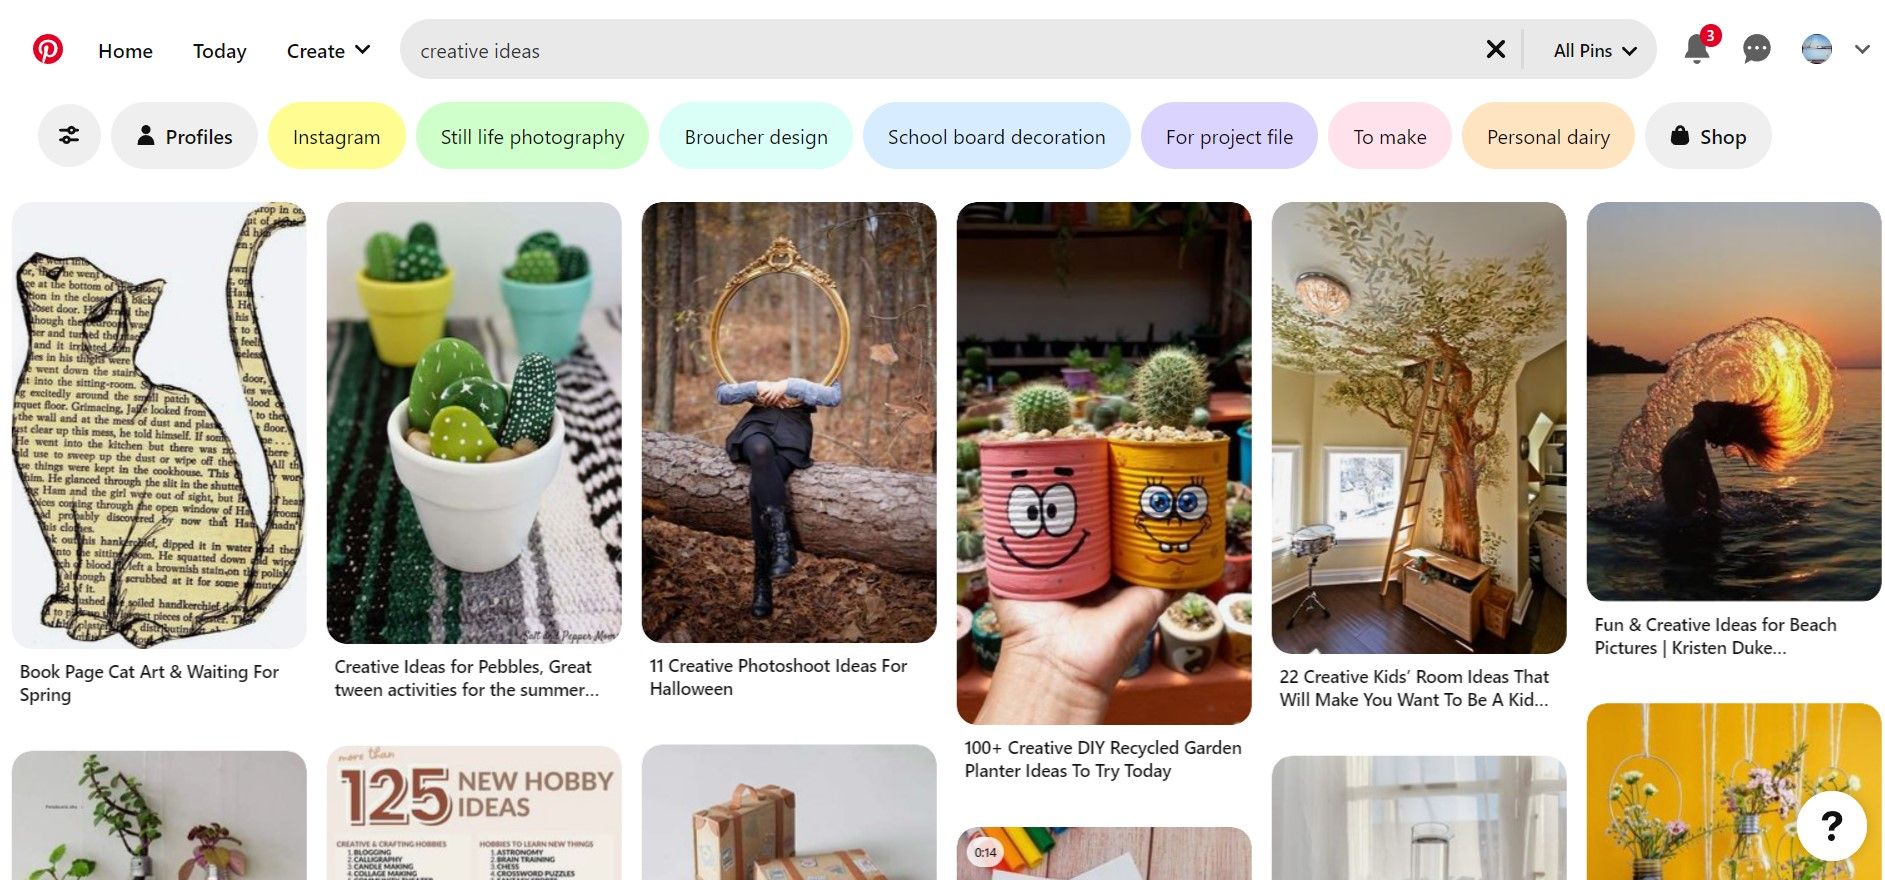 Screenshot of Pinterest creative ideas search